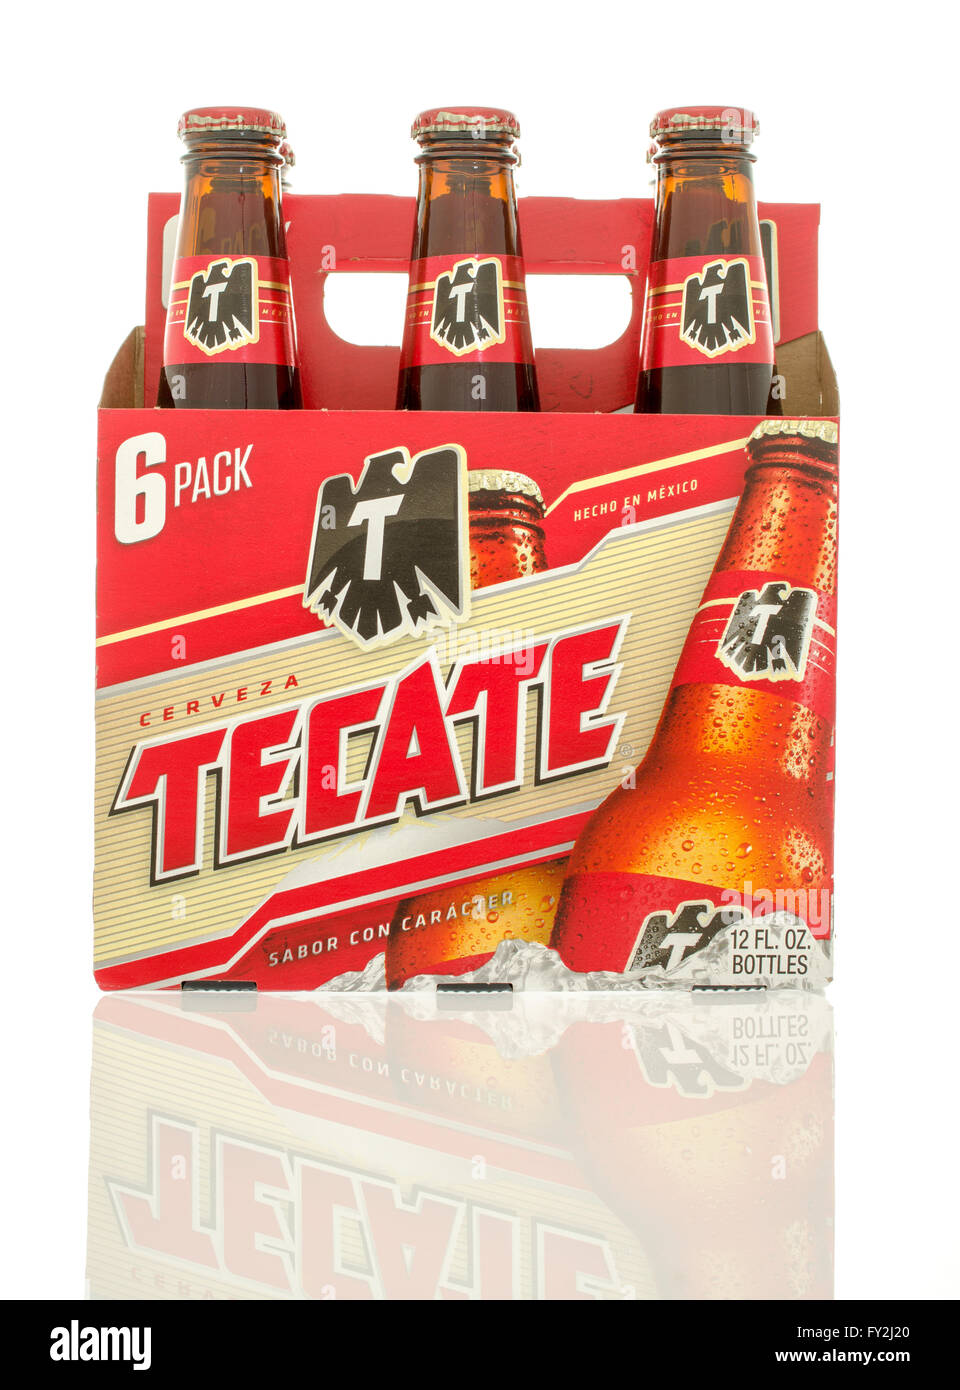 Winneconne, WI - 10 Jan 2016: A six pack of Tecate beer. Stock Photo